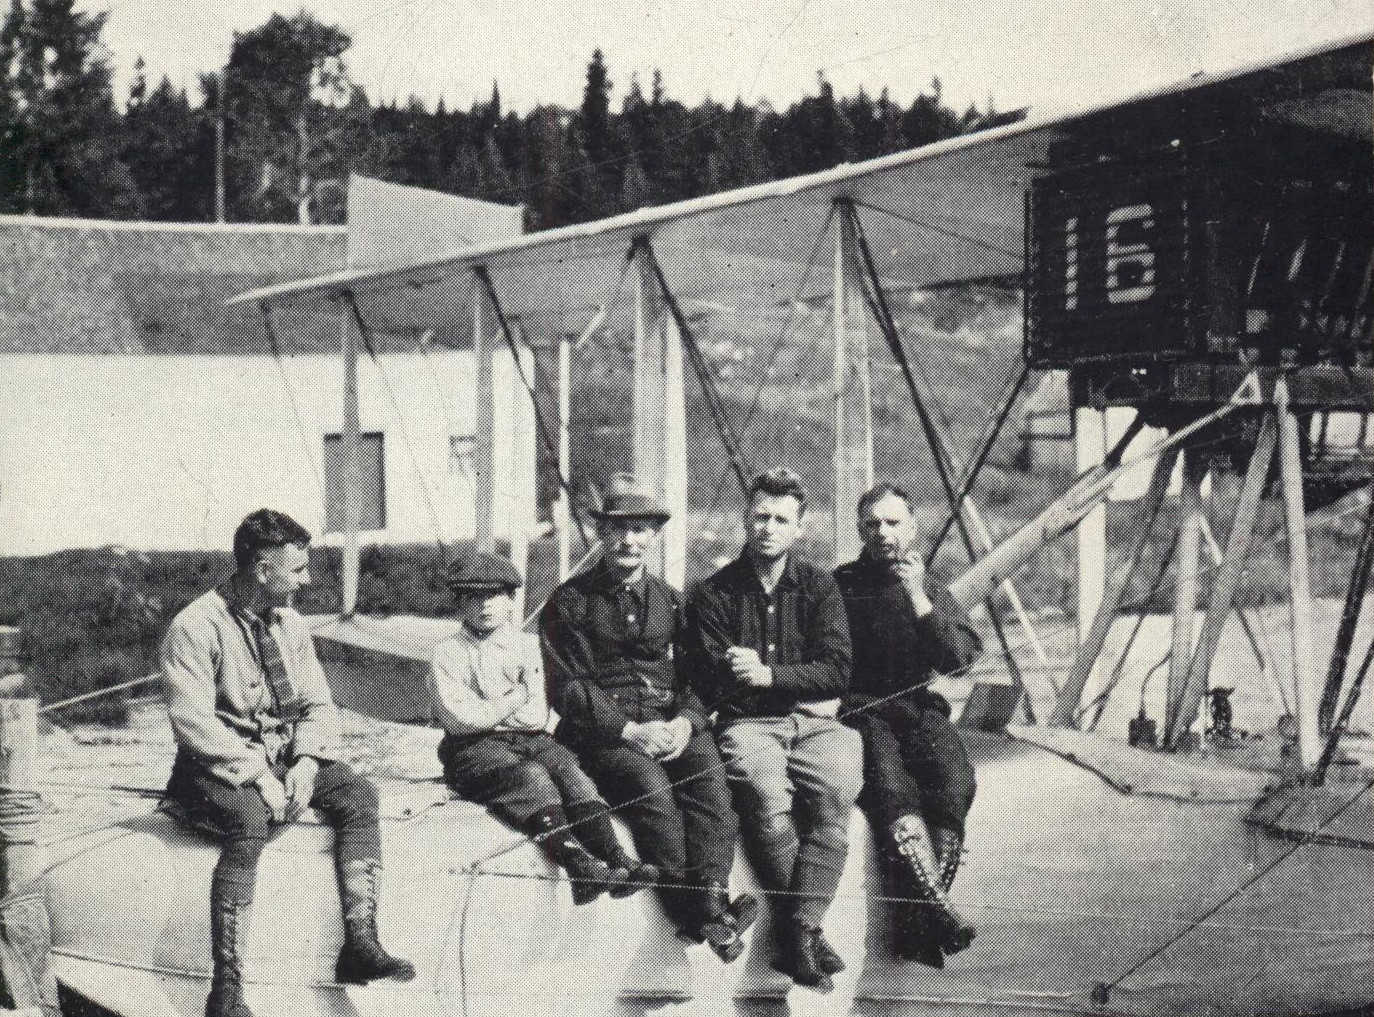 Group of men sitting on flying boat